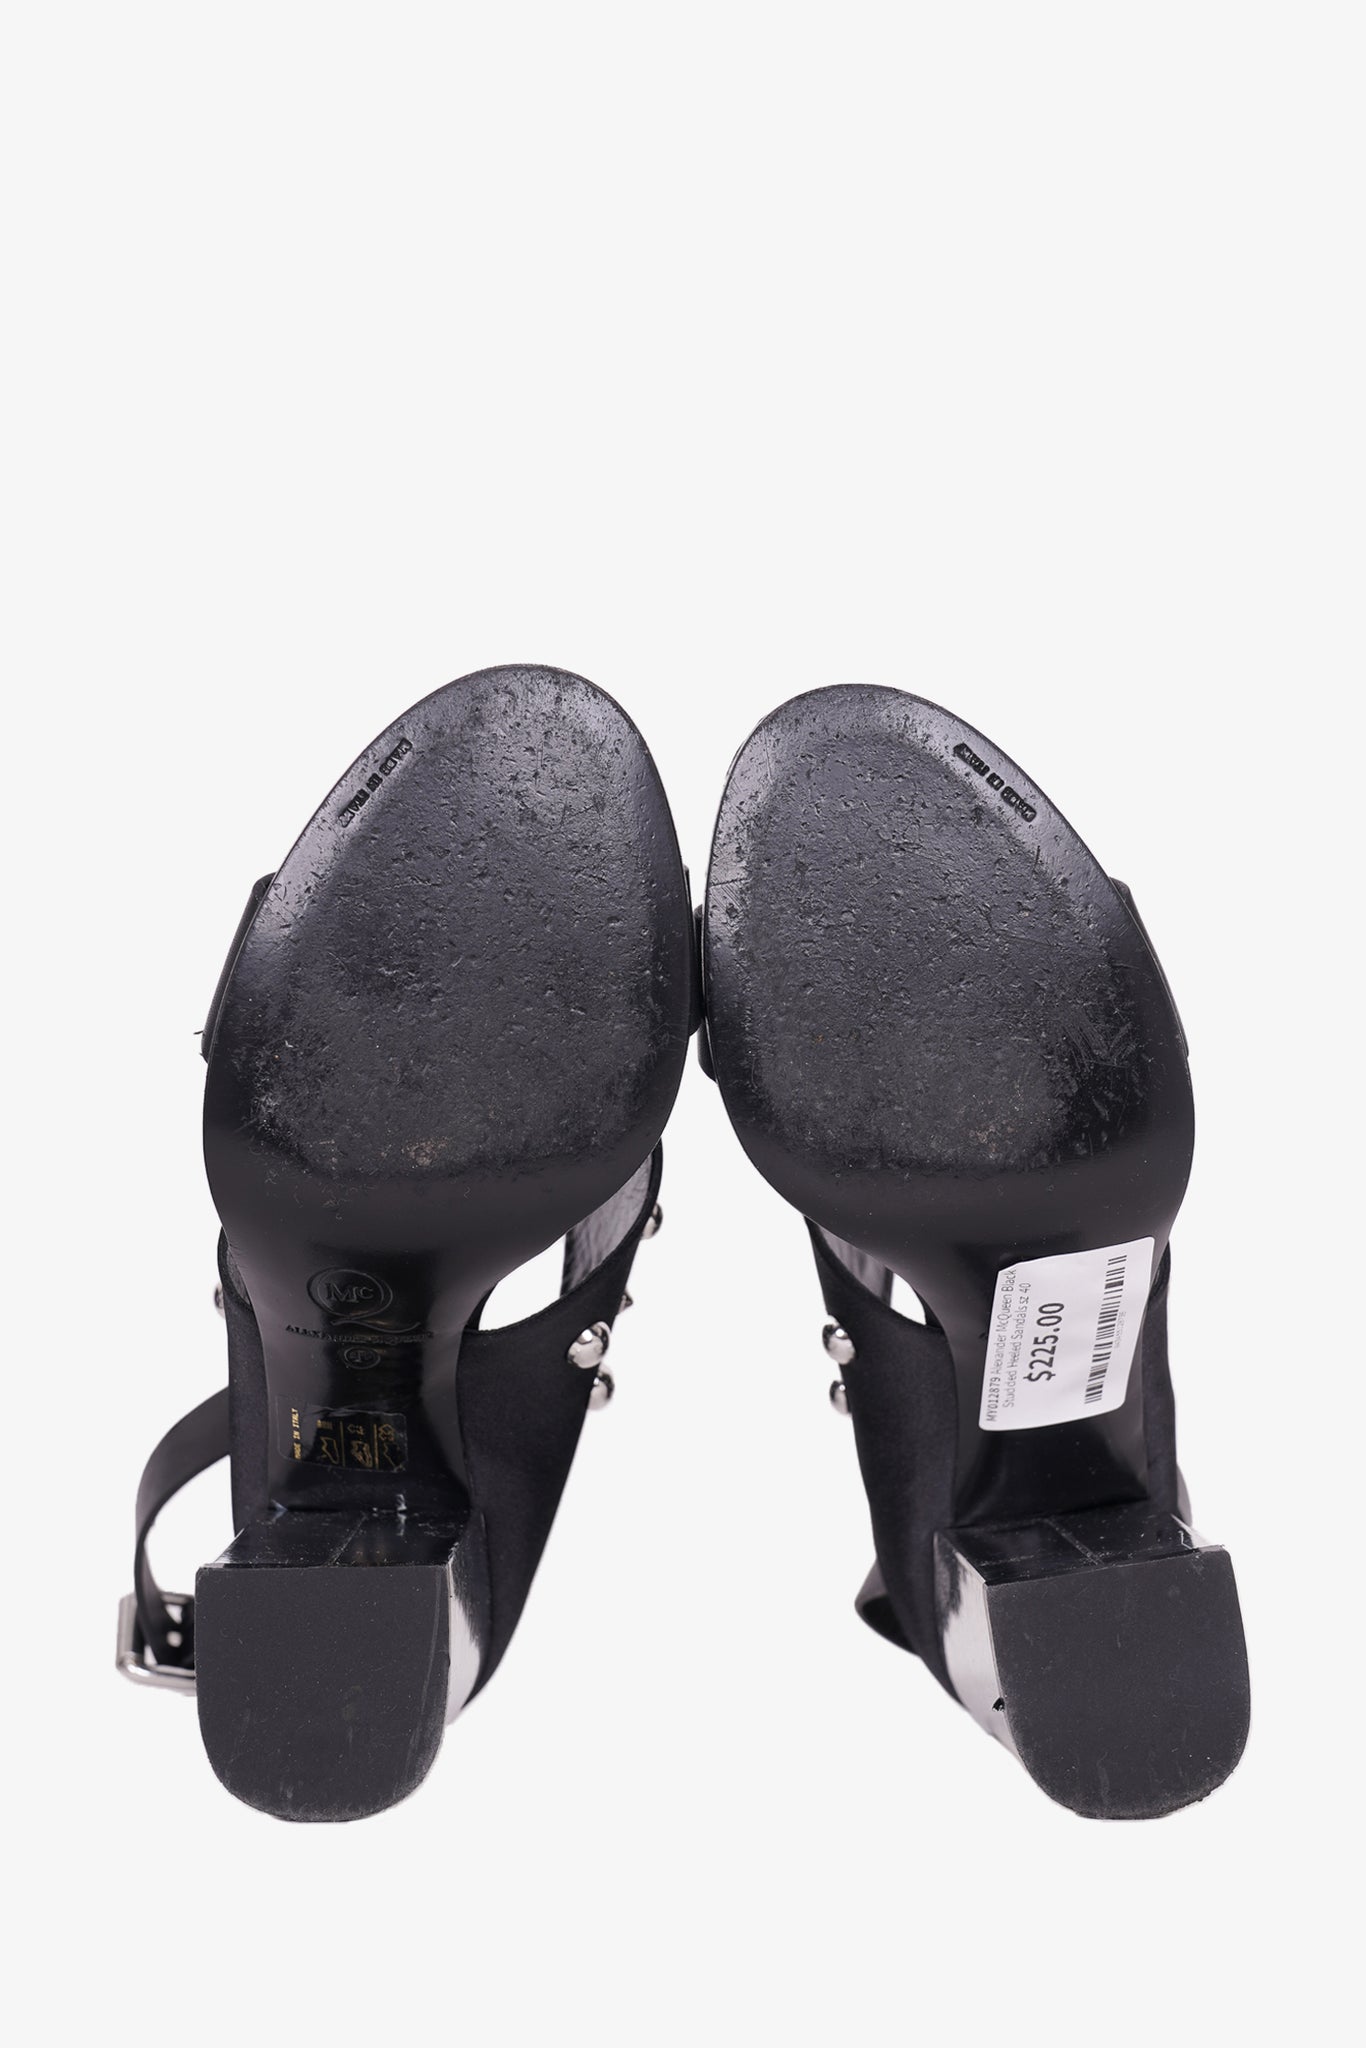 Alexander McQueen Black Studded Heeled Sandals Size 40